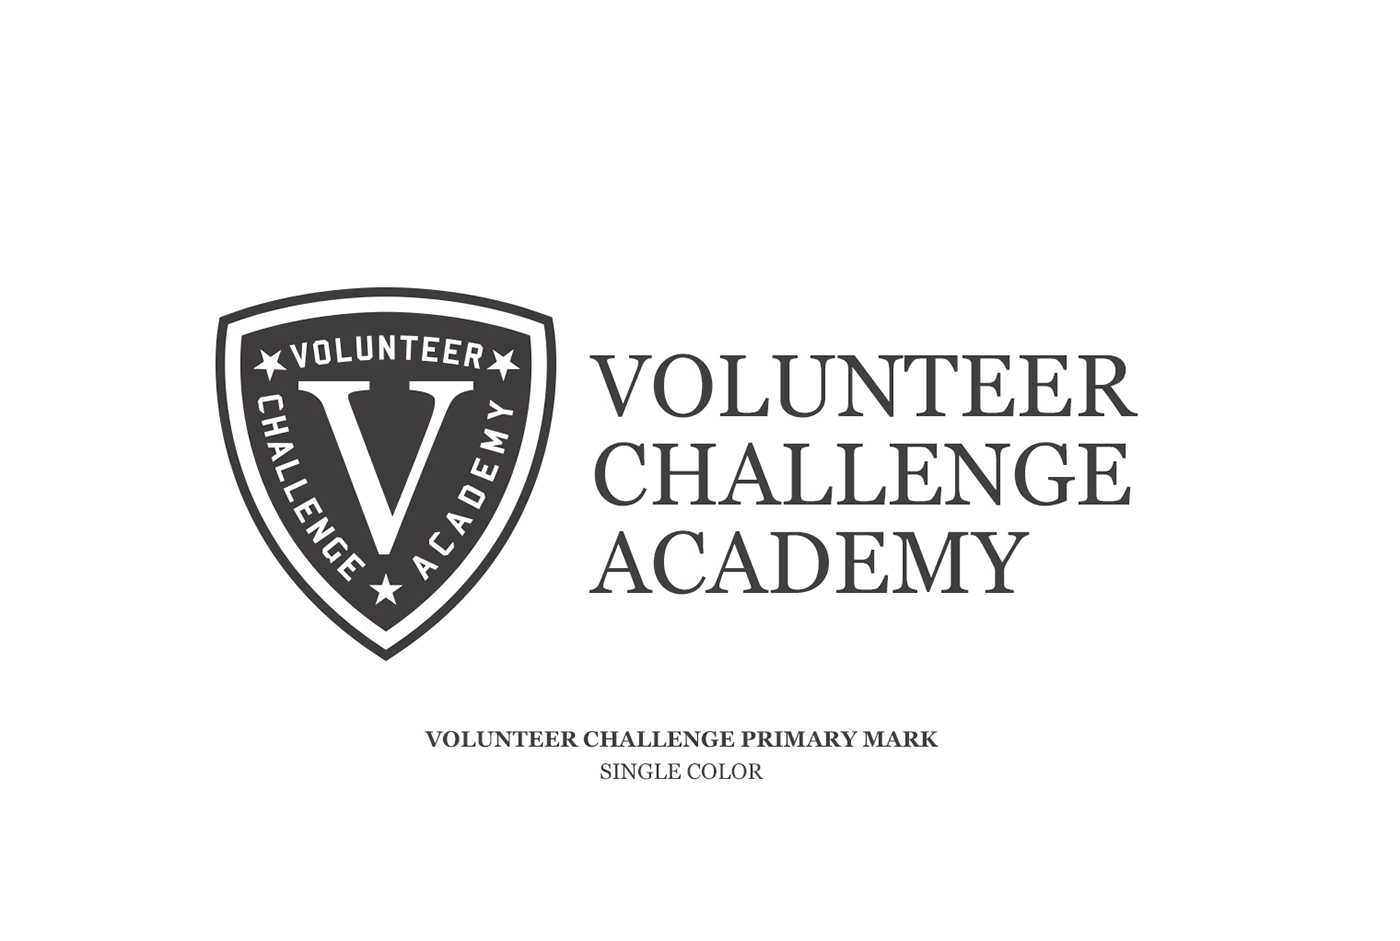 volunteer challenge National Guard army Military Education logo orange agca